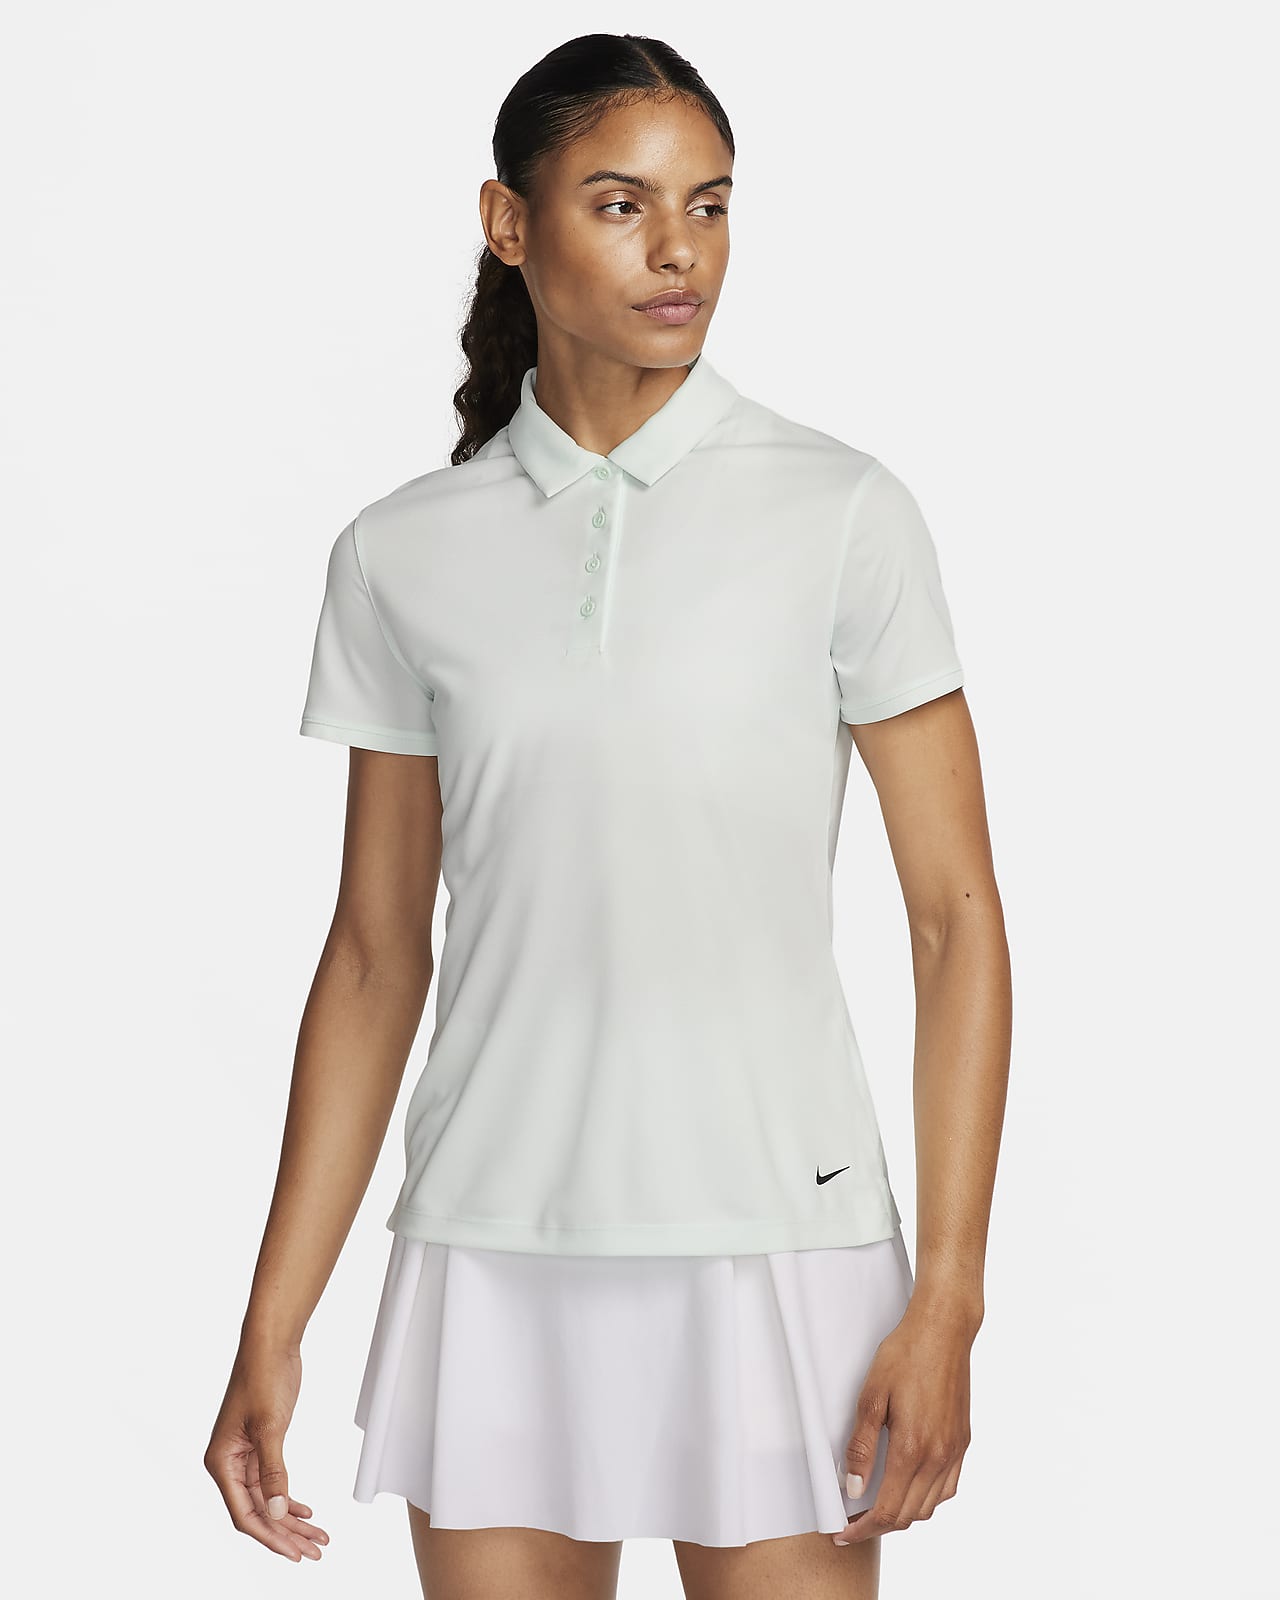 Nike Dri-FIT Victory Women\'s Polo. Golf